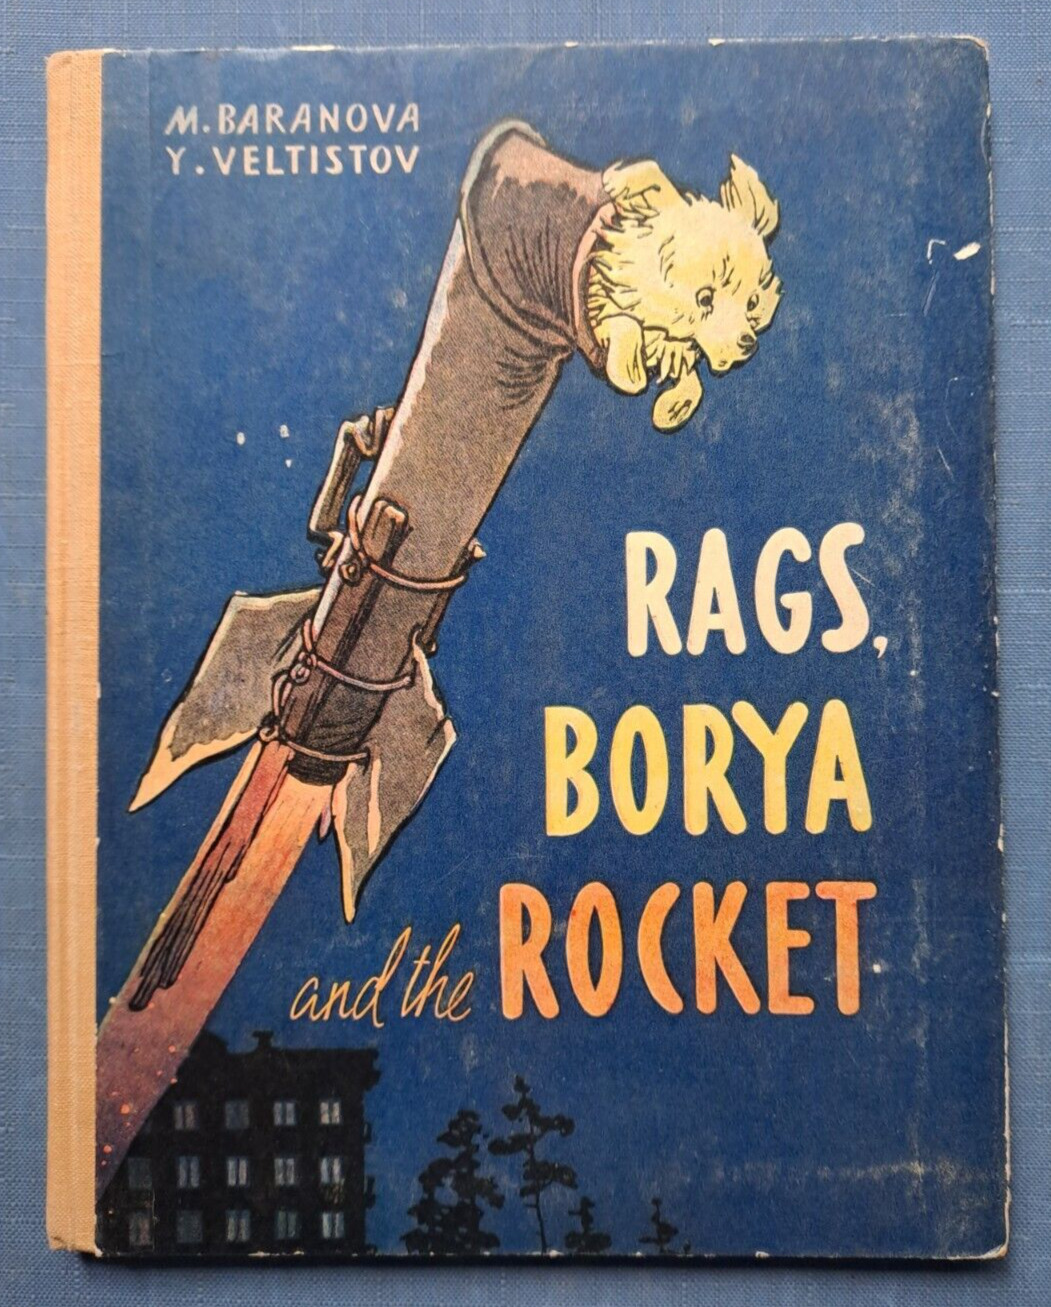 1962 Rags Borya and Rocket Space dog Laika Belka Strelka Russian book in English